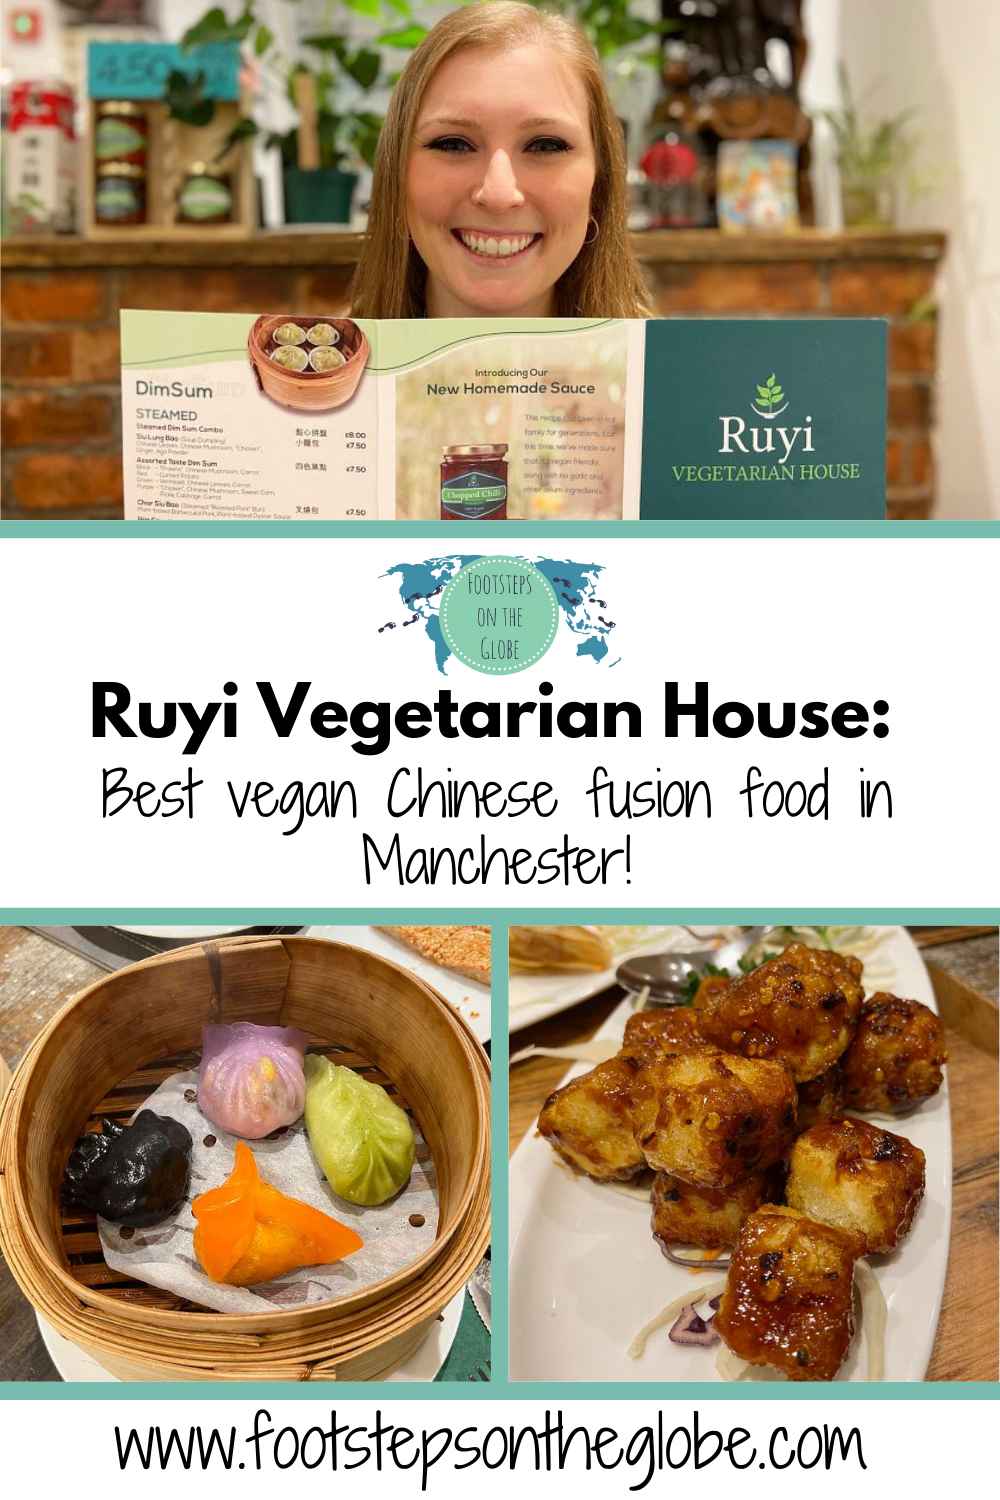 Ruyi Vegetarian House Pinterest image